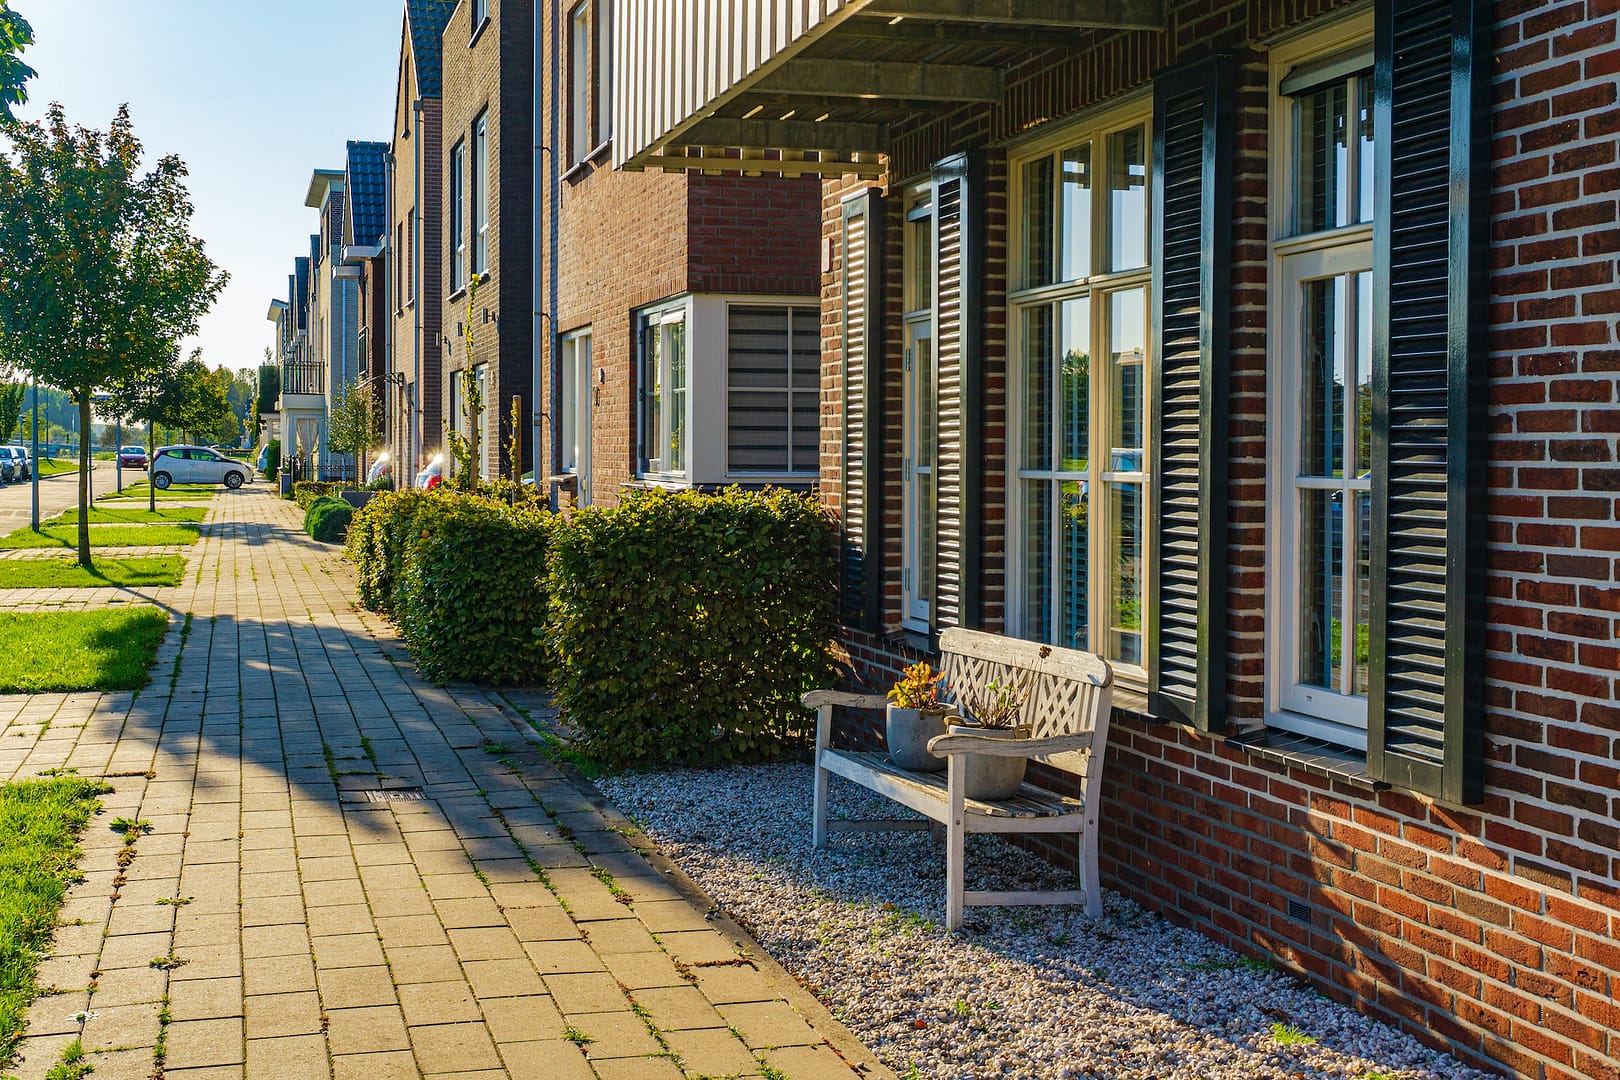 A residential Dutch street